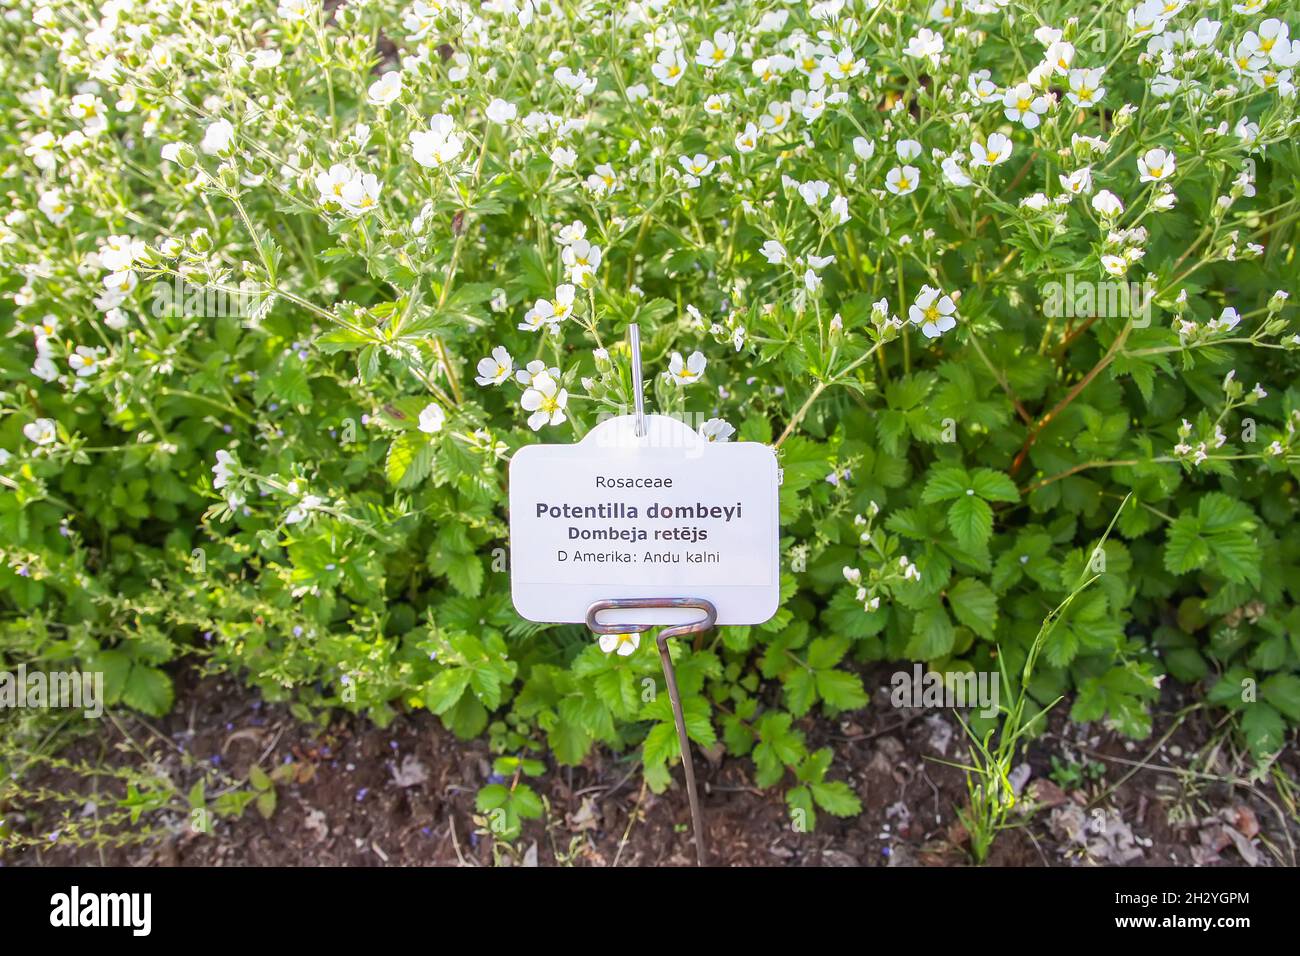 Potentilla dombeyi plant with identification label in latin and latvian language in botanical garden of Latvian University, Riga, Latvia. Stock Photo